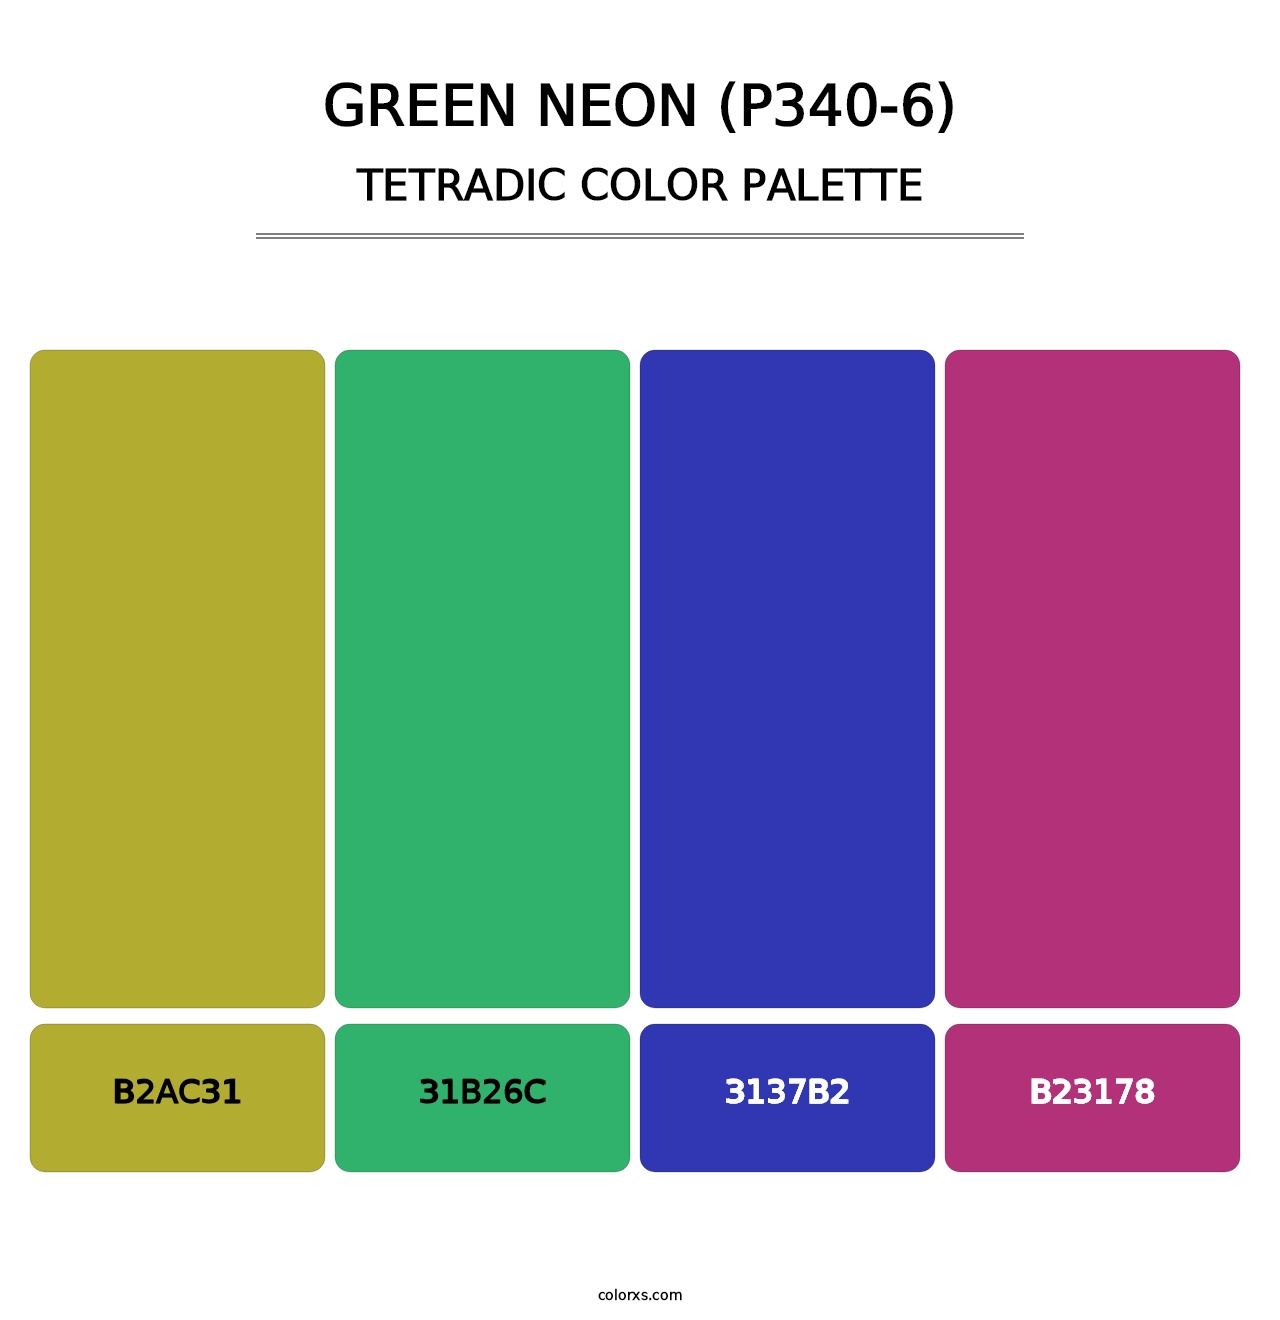 Green Neon (P340-6) - Tetradic Color Palette